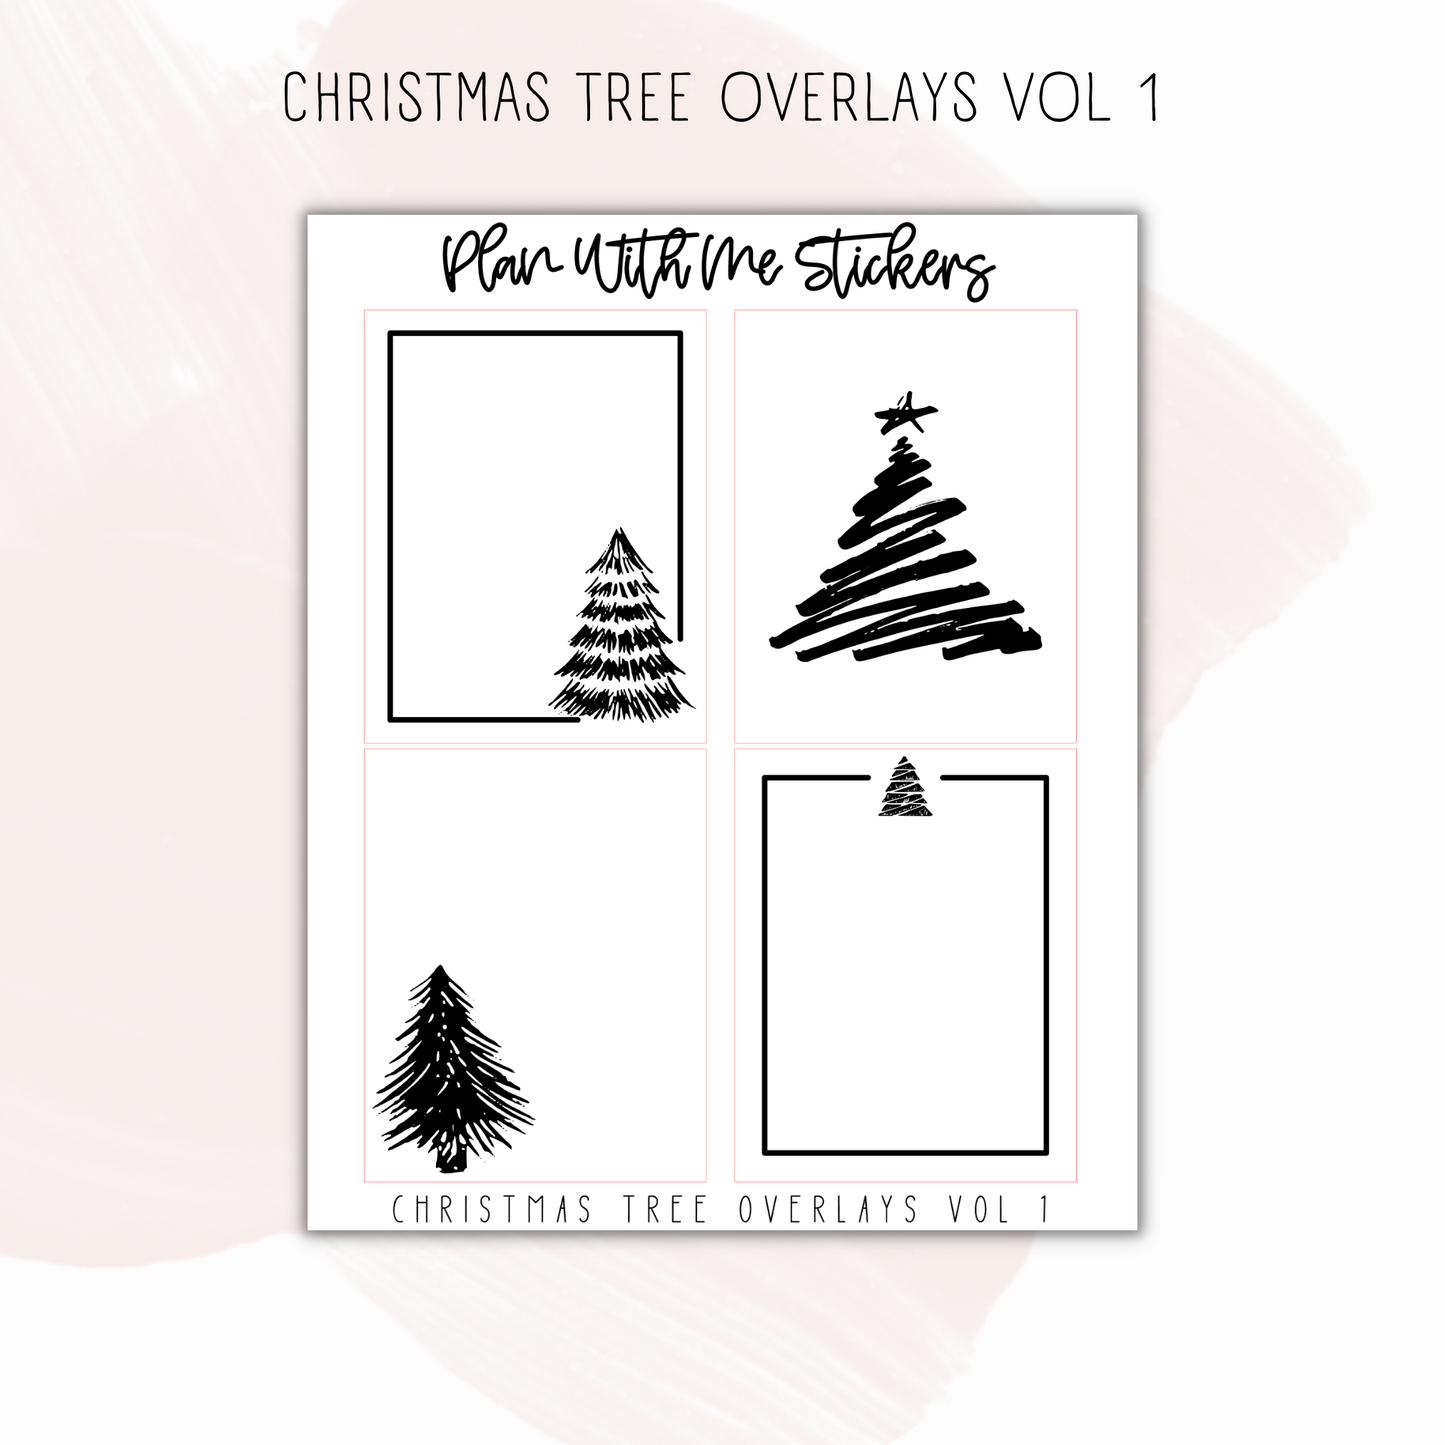 Christmas Tree Overlays Vol 1